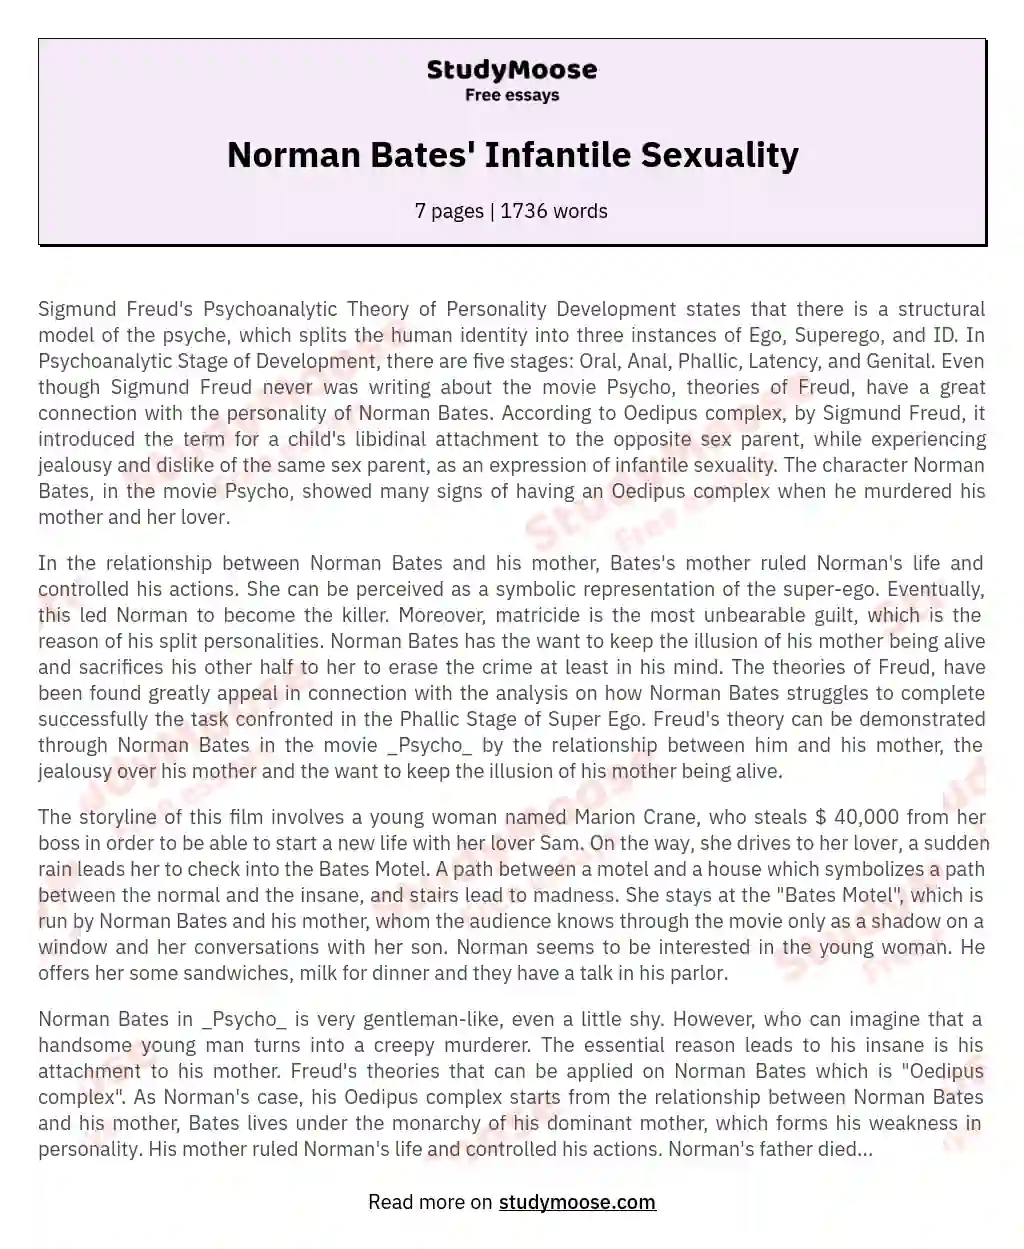 Norman Bates' Infantile Sexuality essay